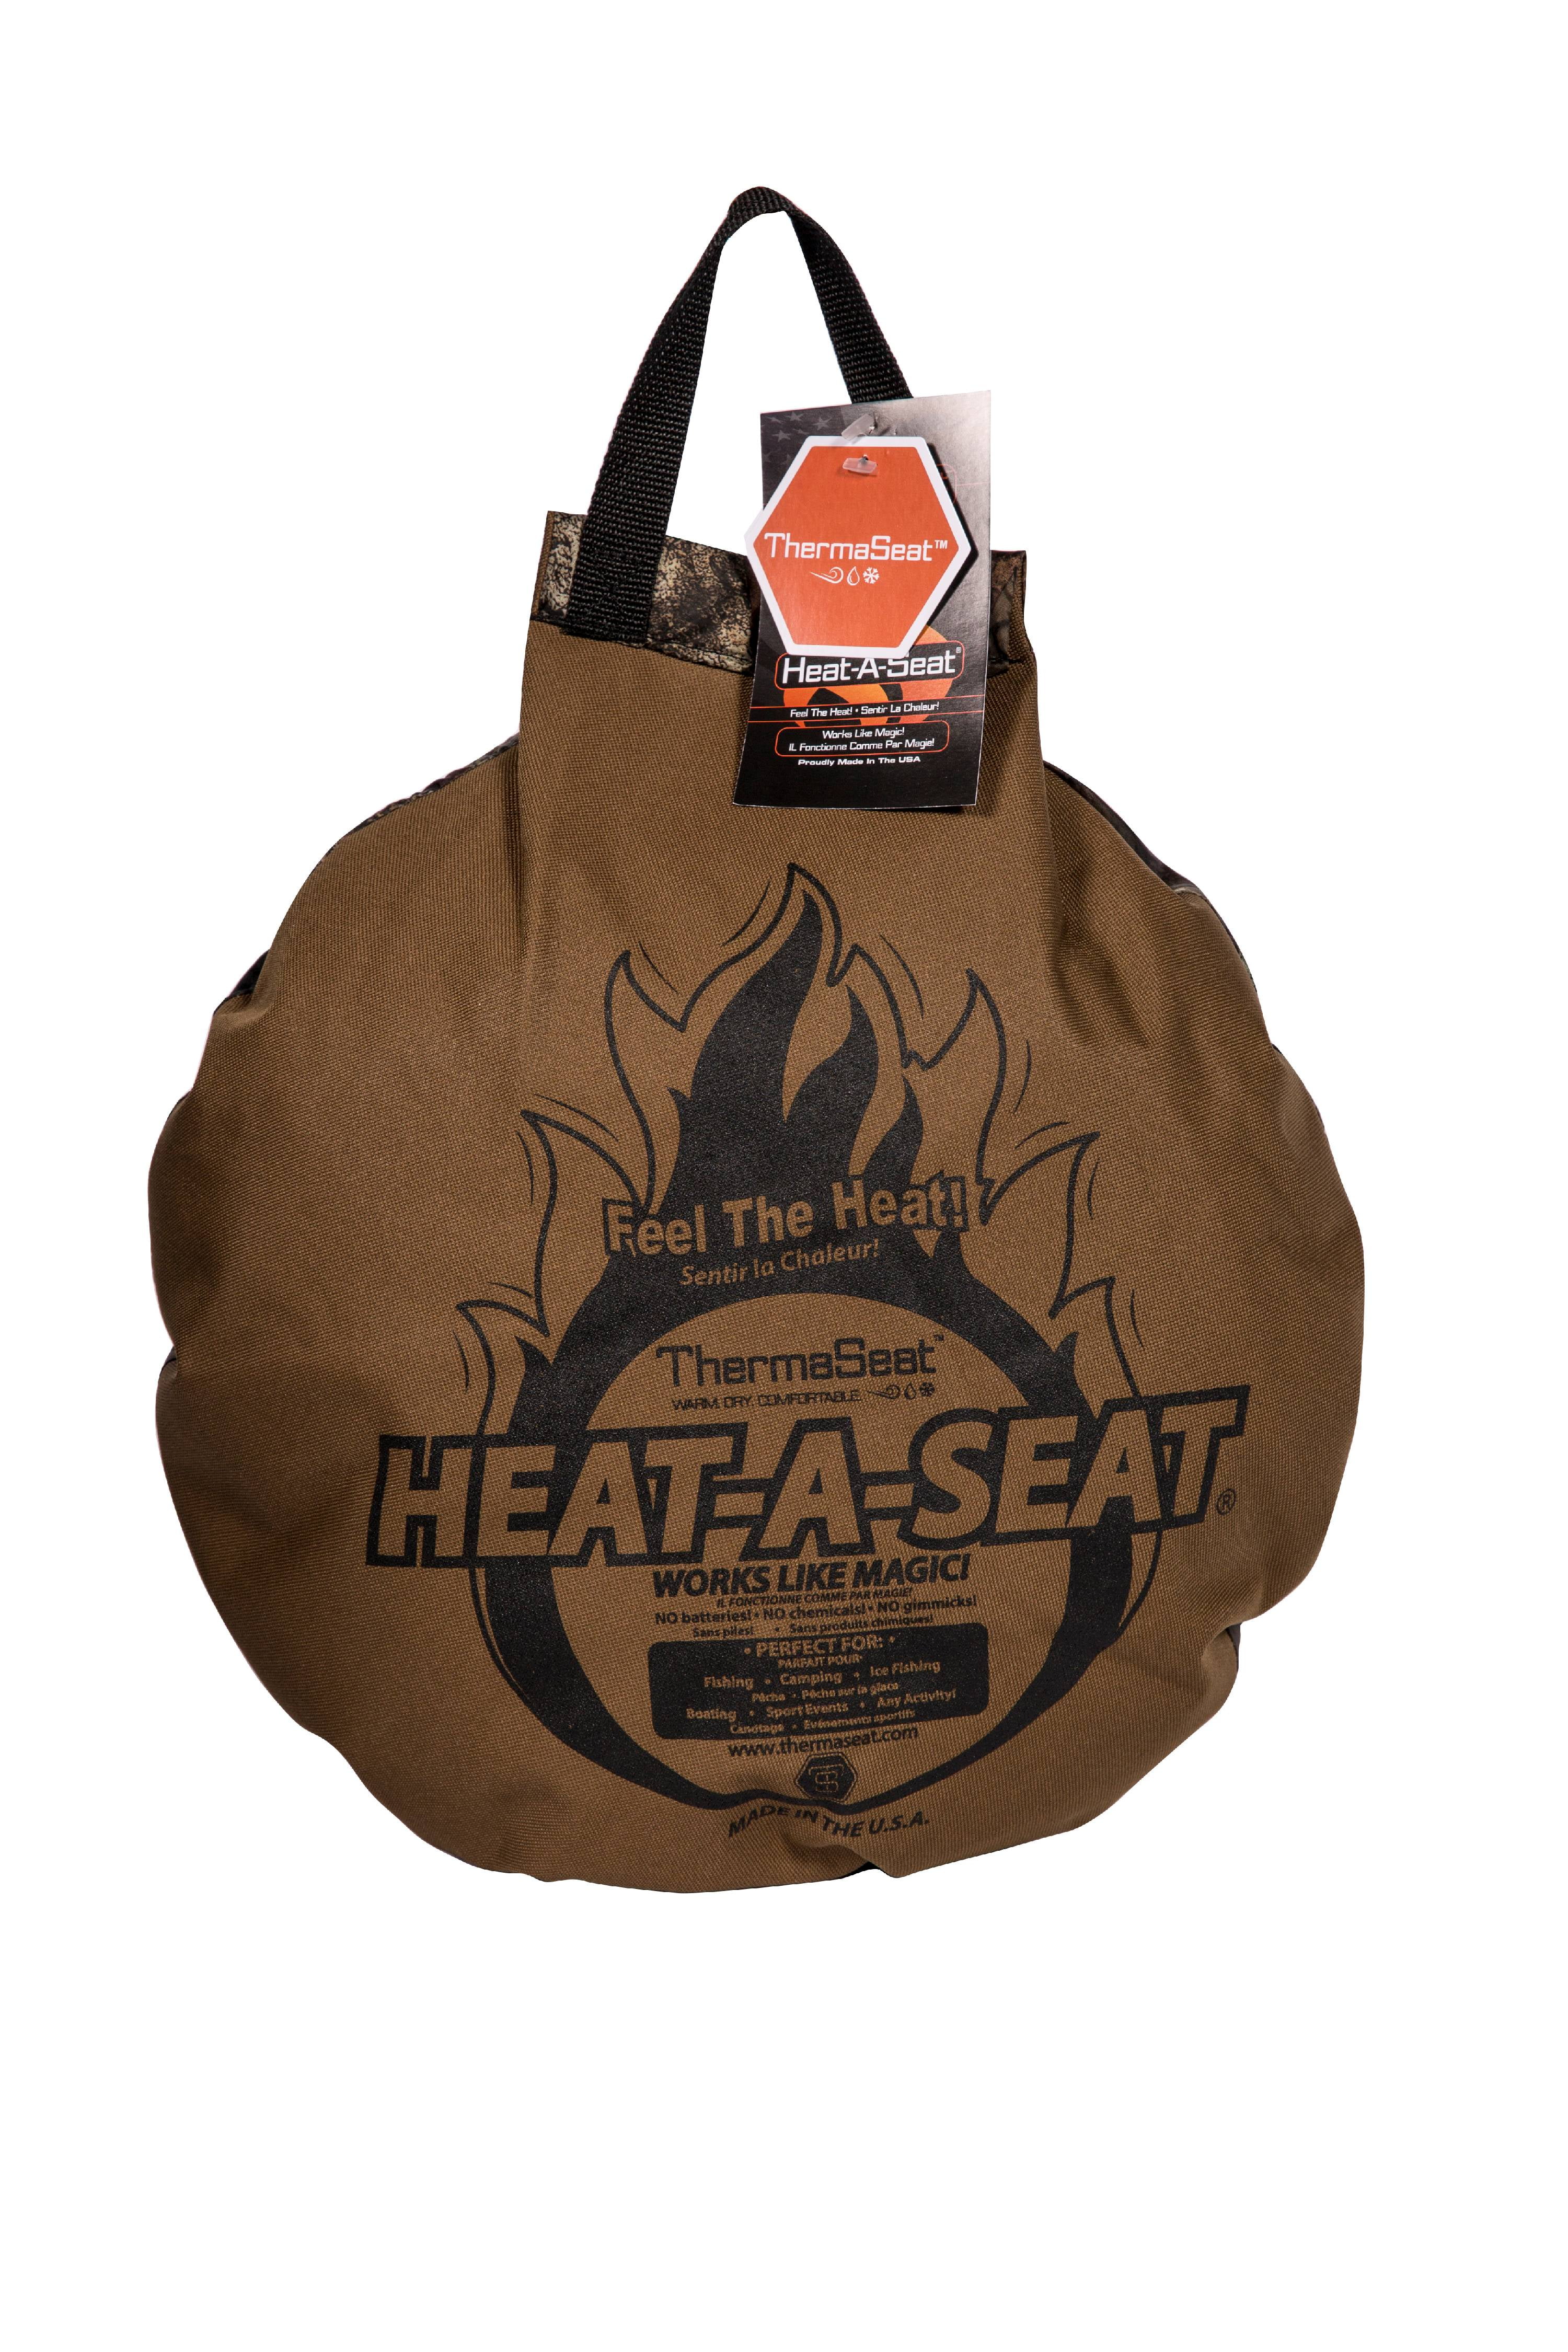 Heat-A-Seat Thermaseat Cushion Works Like Magic Hunting Fishing Camping  NWT